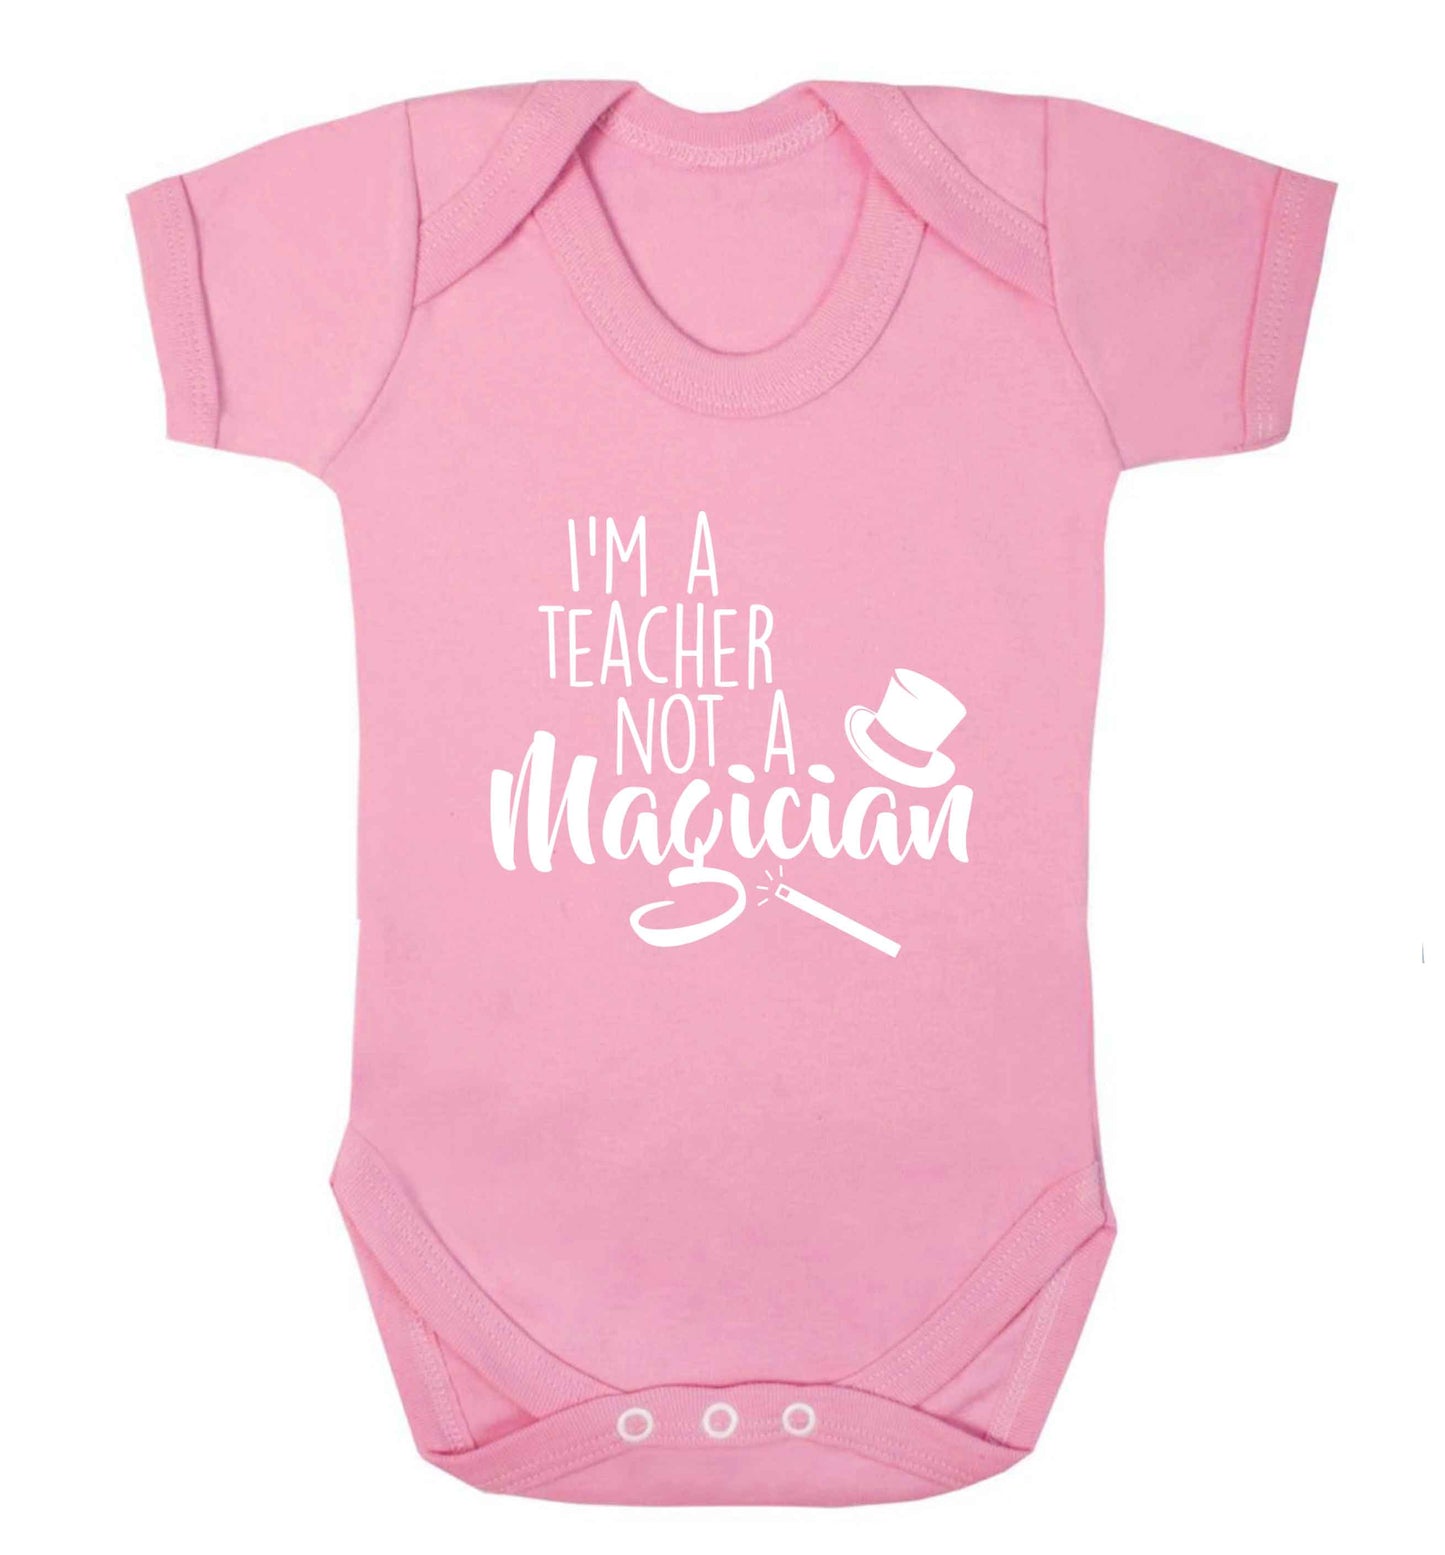 I'm a teacher not a magician baby vest pale pink 18-24 months